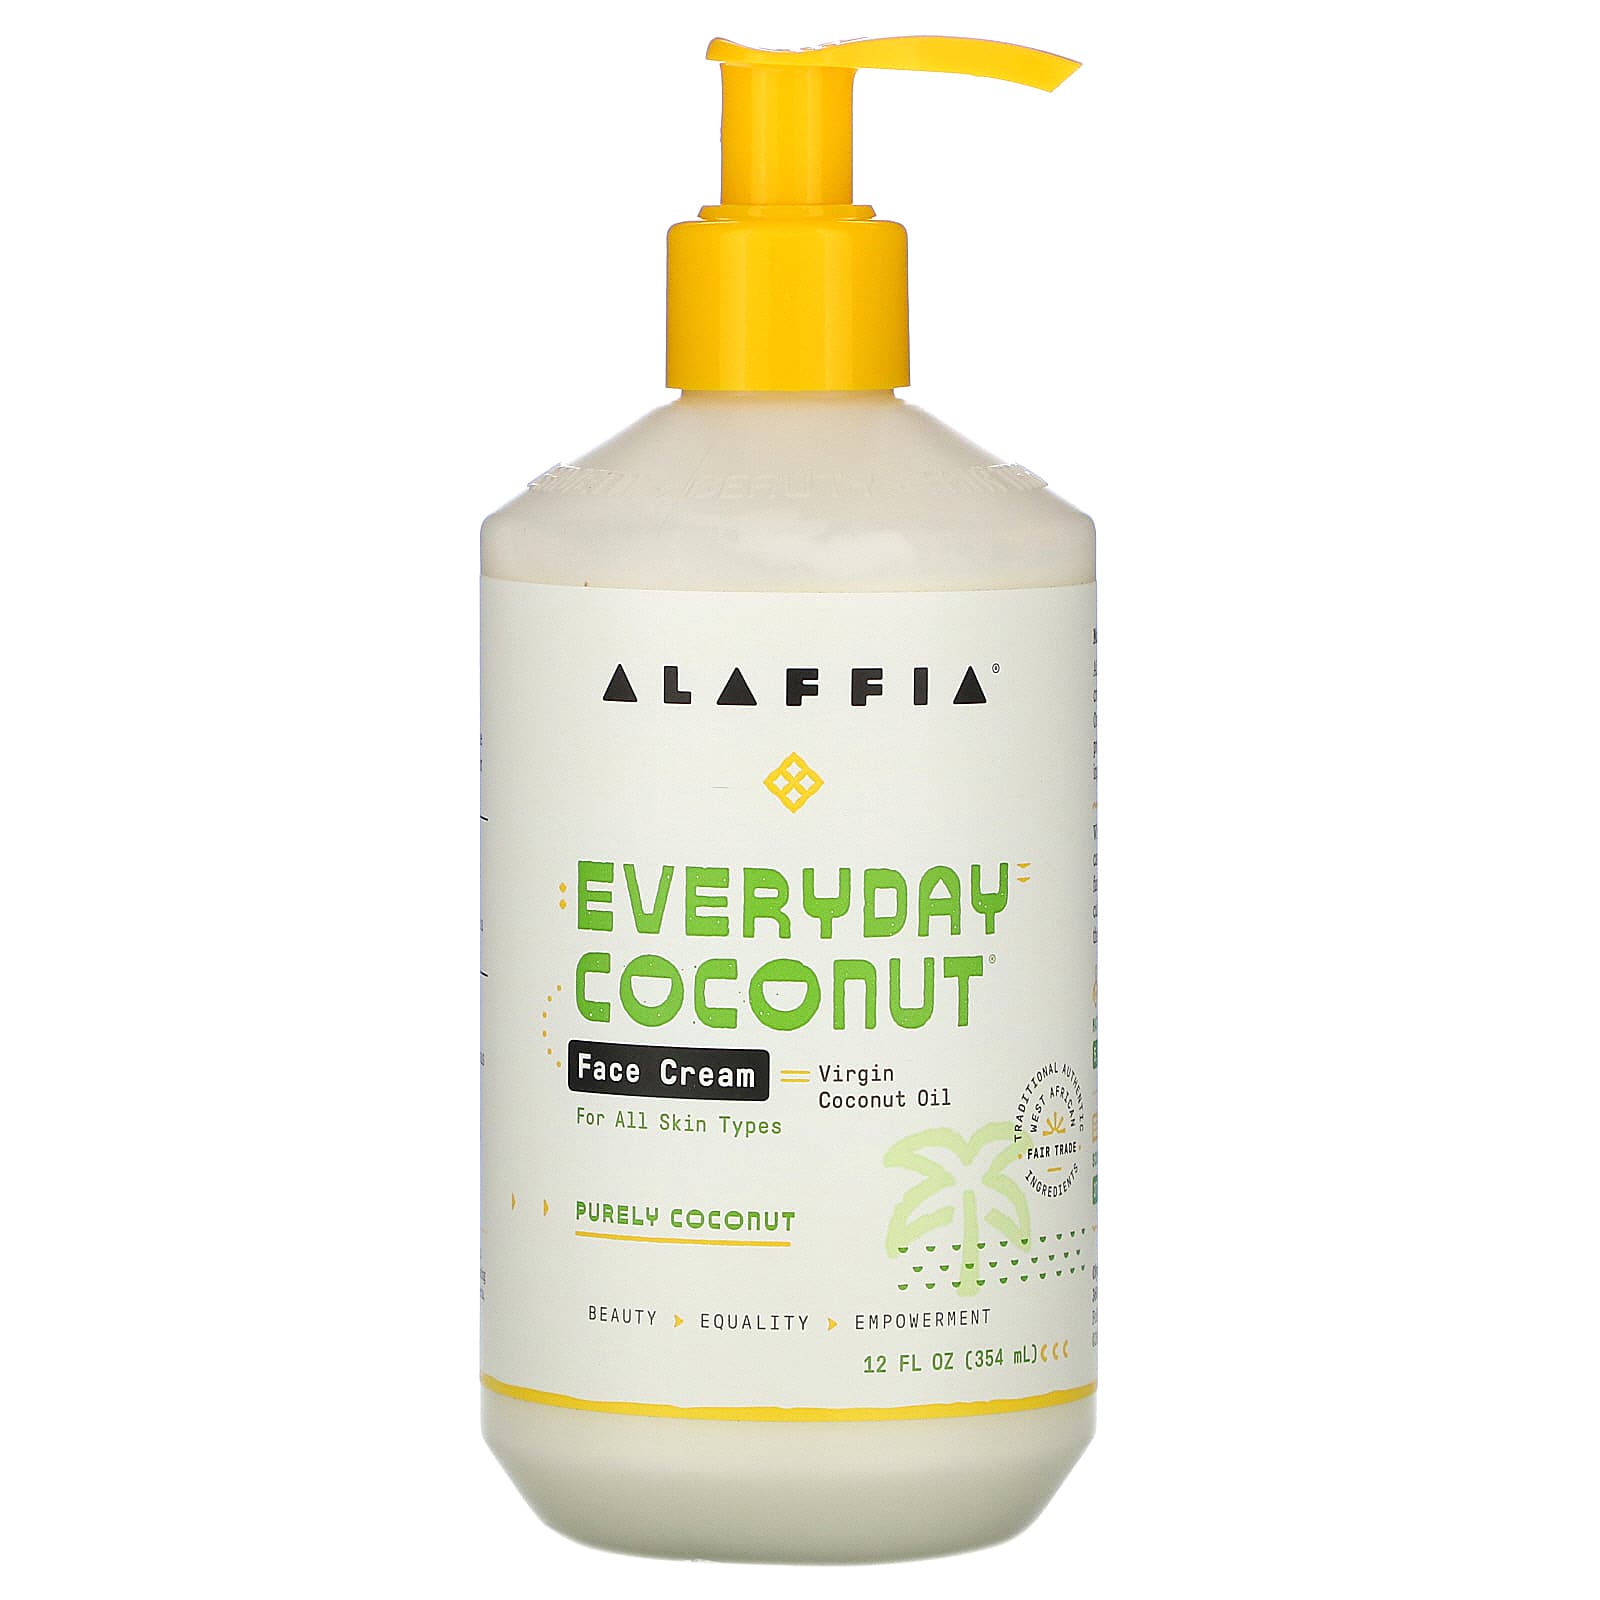 Alaffia, Everyday Coconut, Face Cream, Purely Coconut (354 ml)